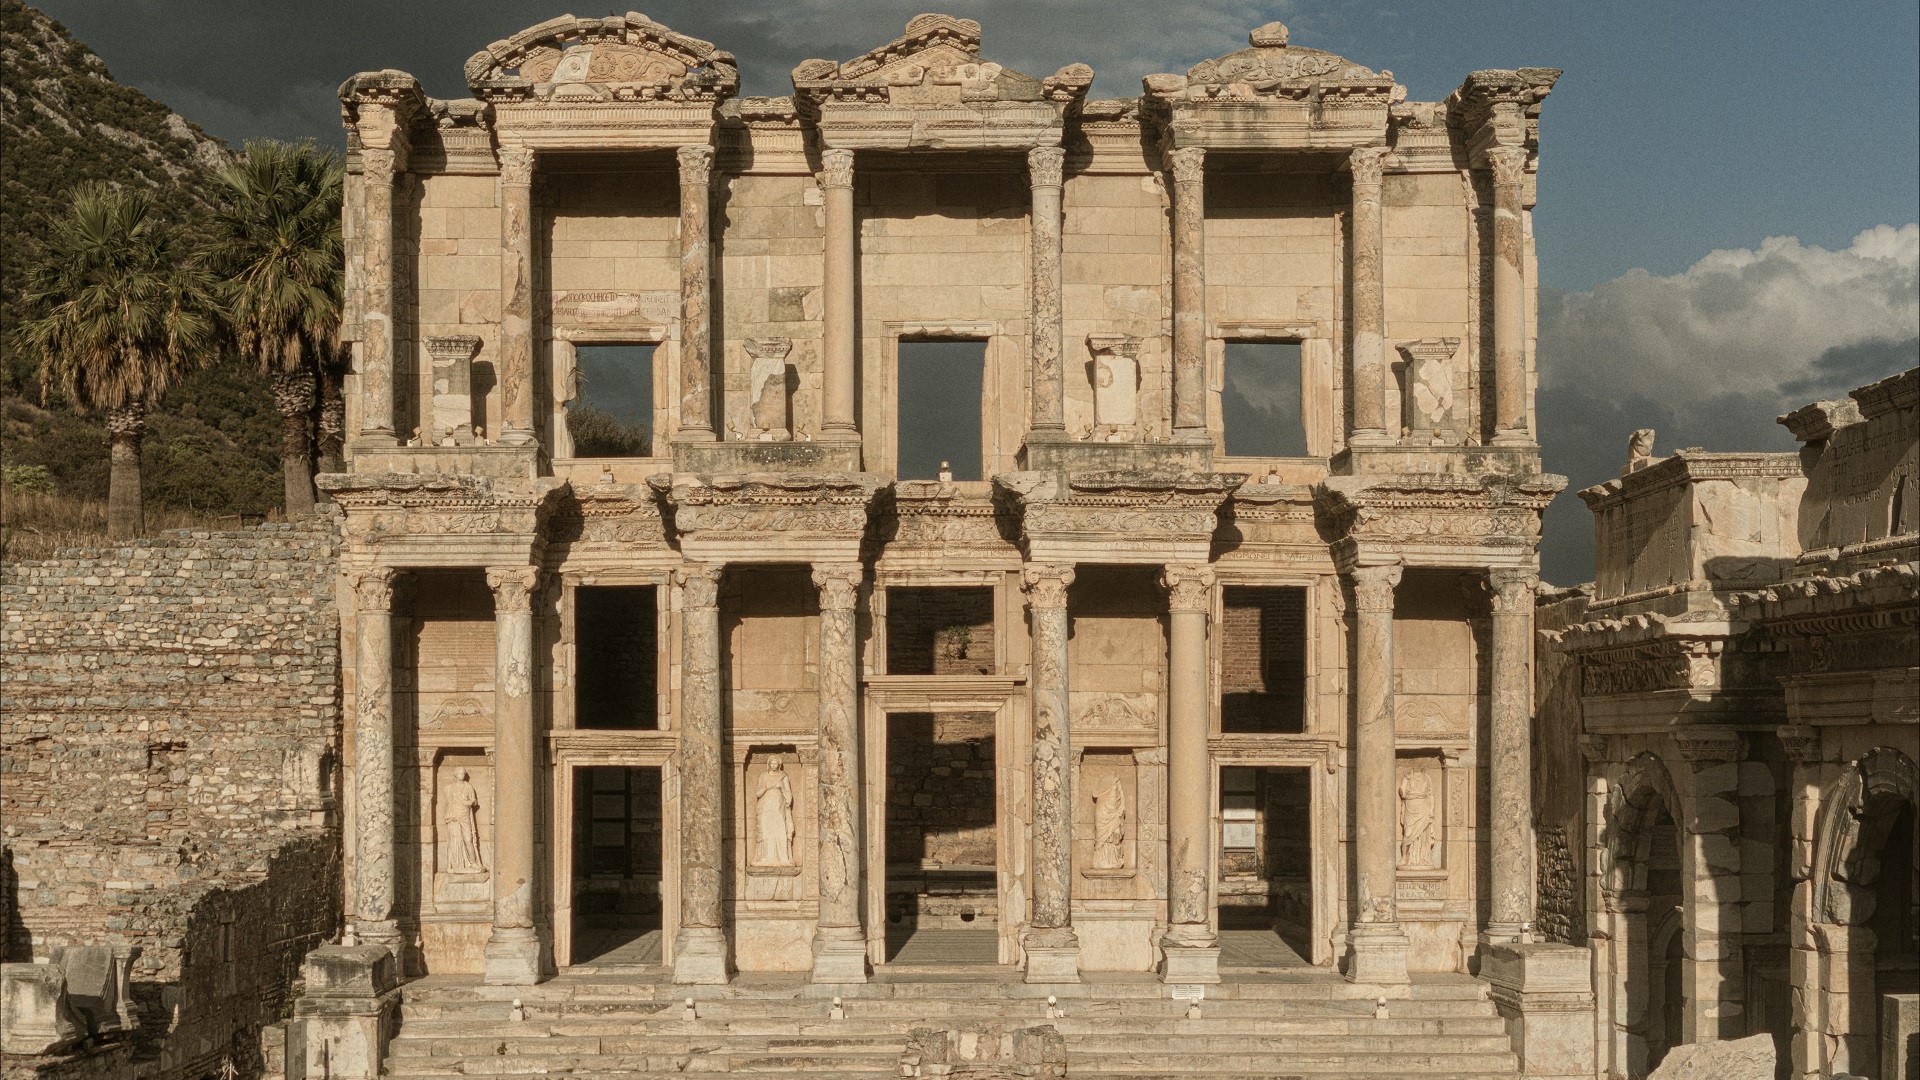 Ephesus - Image Credit: https://unsplash.com/@nicogav